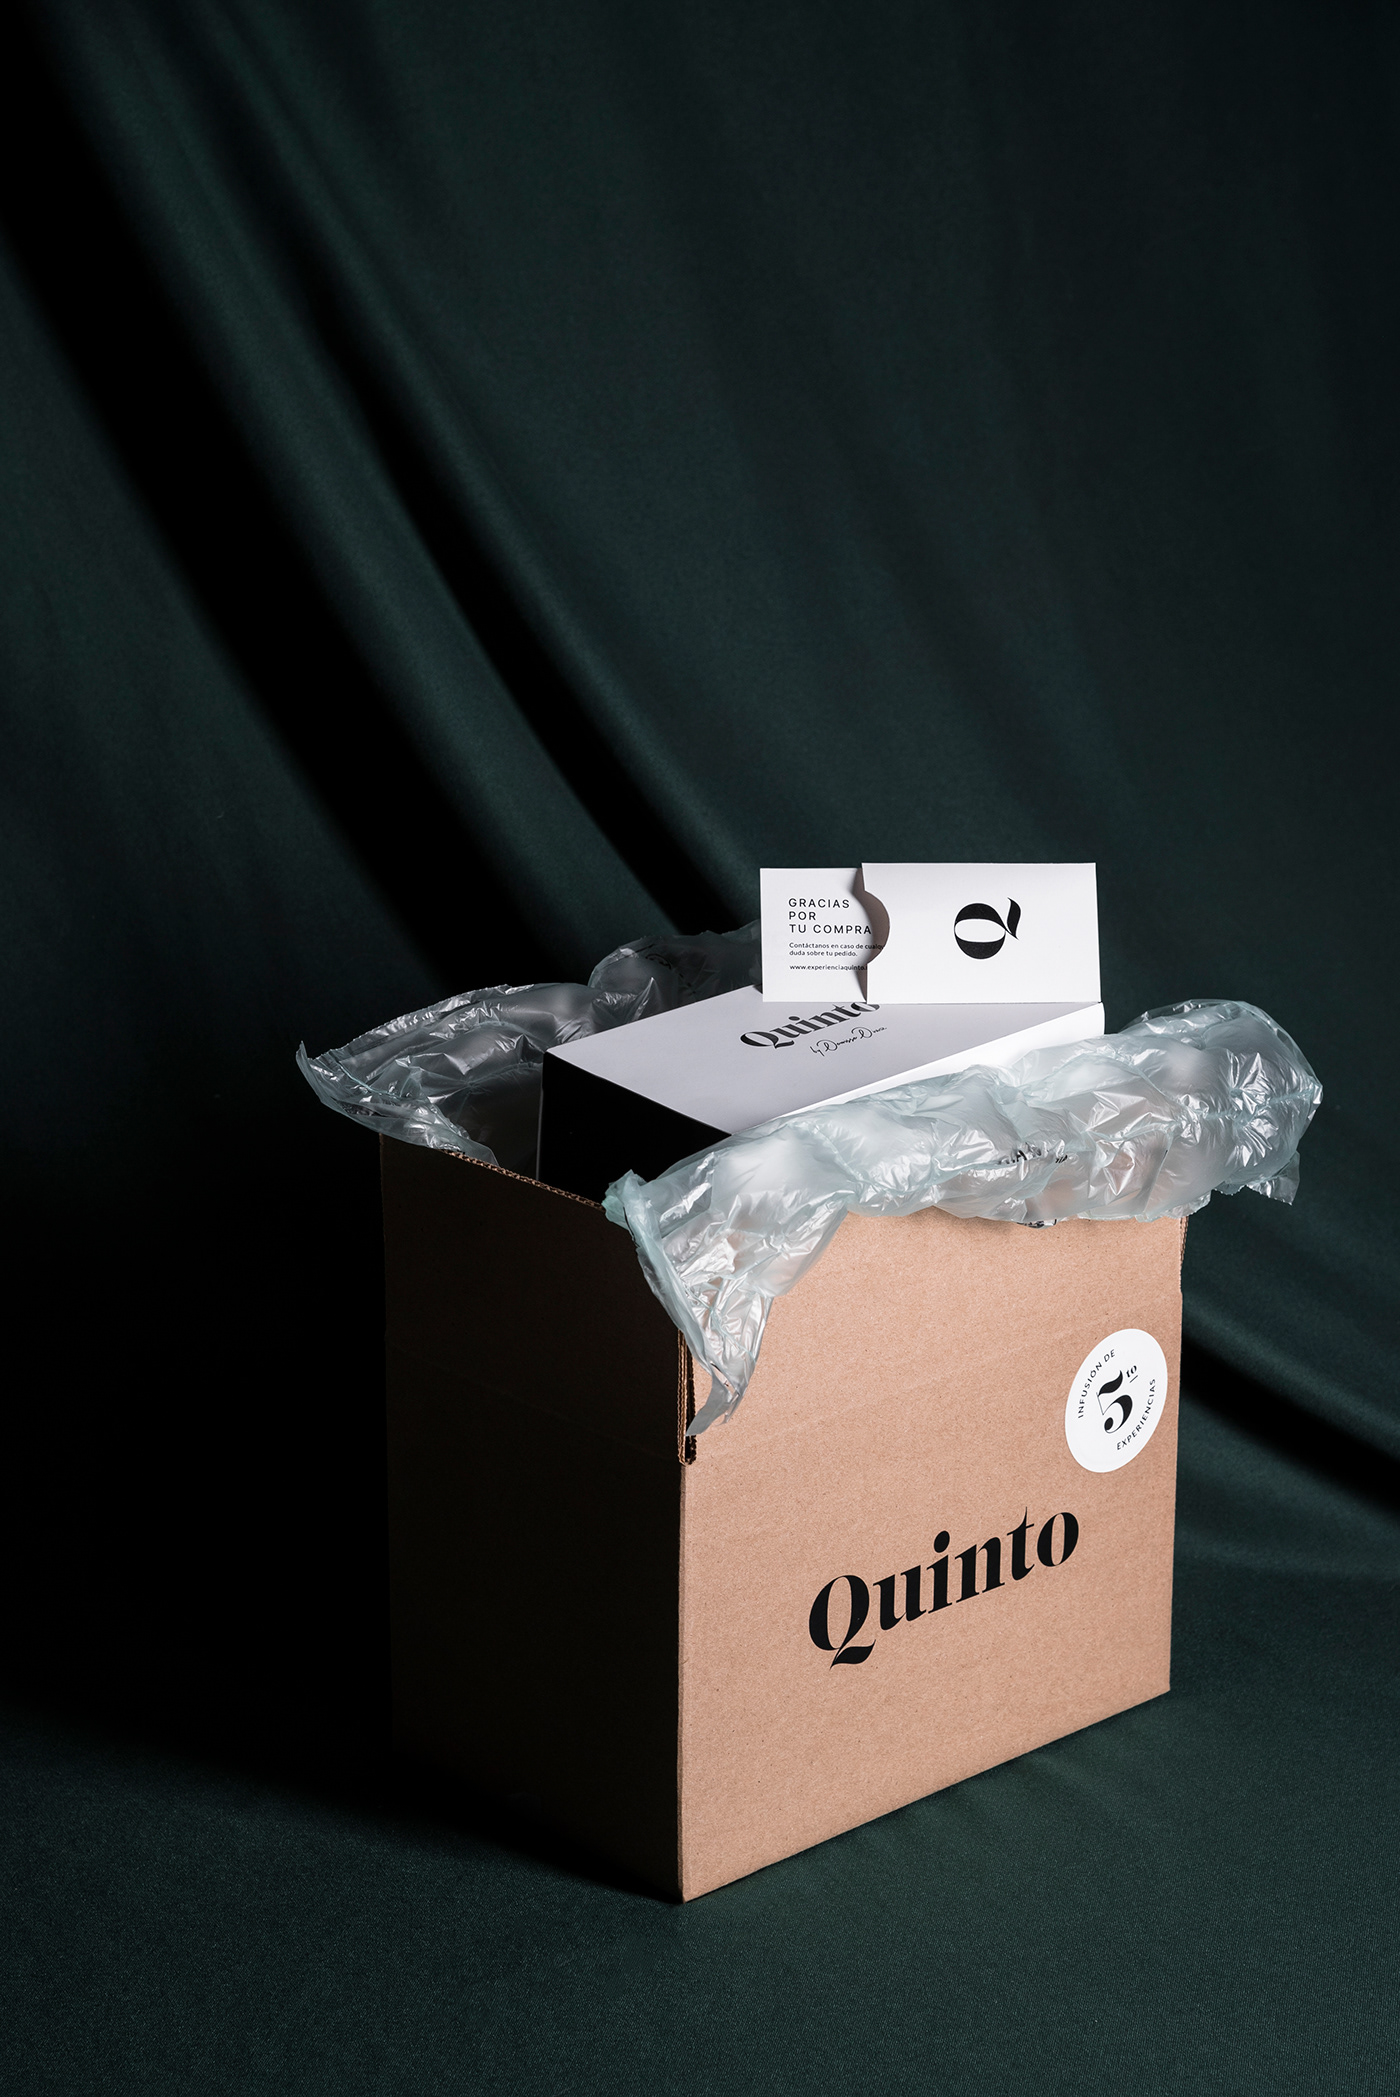 Quinto mexico Guadalajara ILLUSTRATION  identity branding  Packaging Tea shop tea Logotype